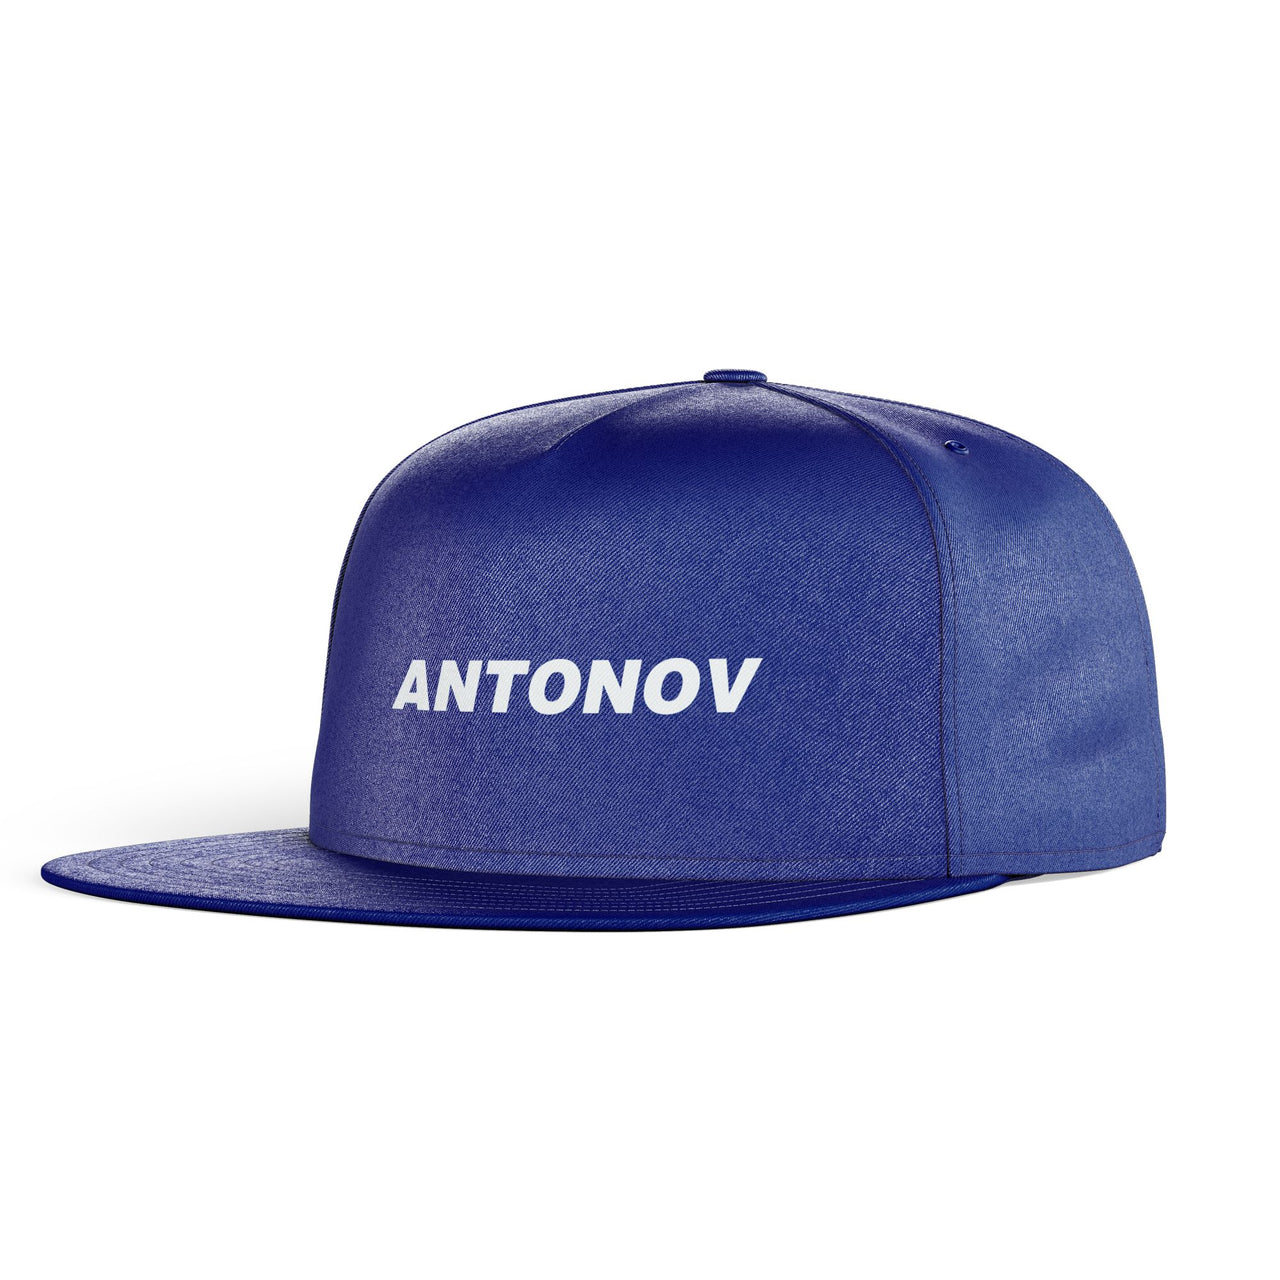 Antonov & Text Designed Snapback Caps & Hats